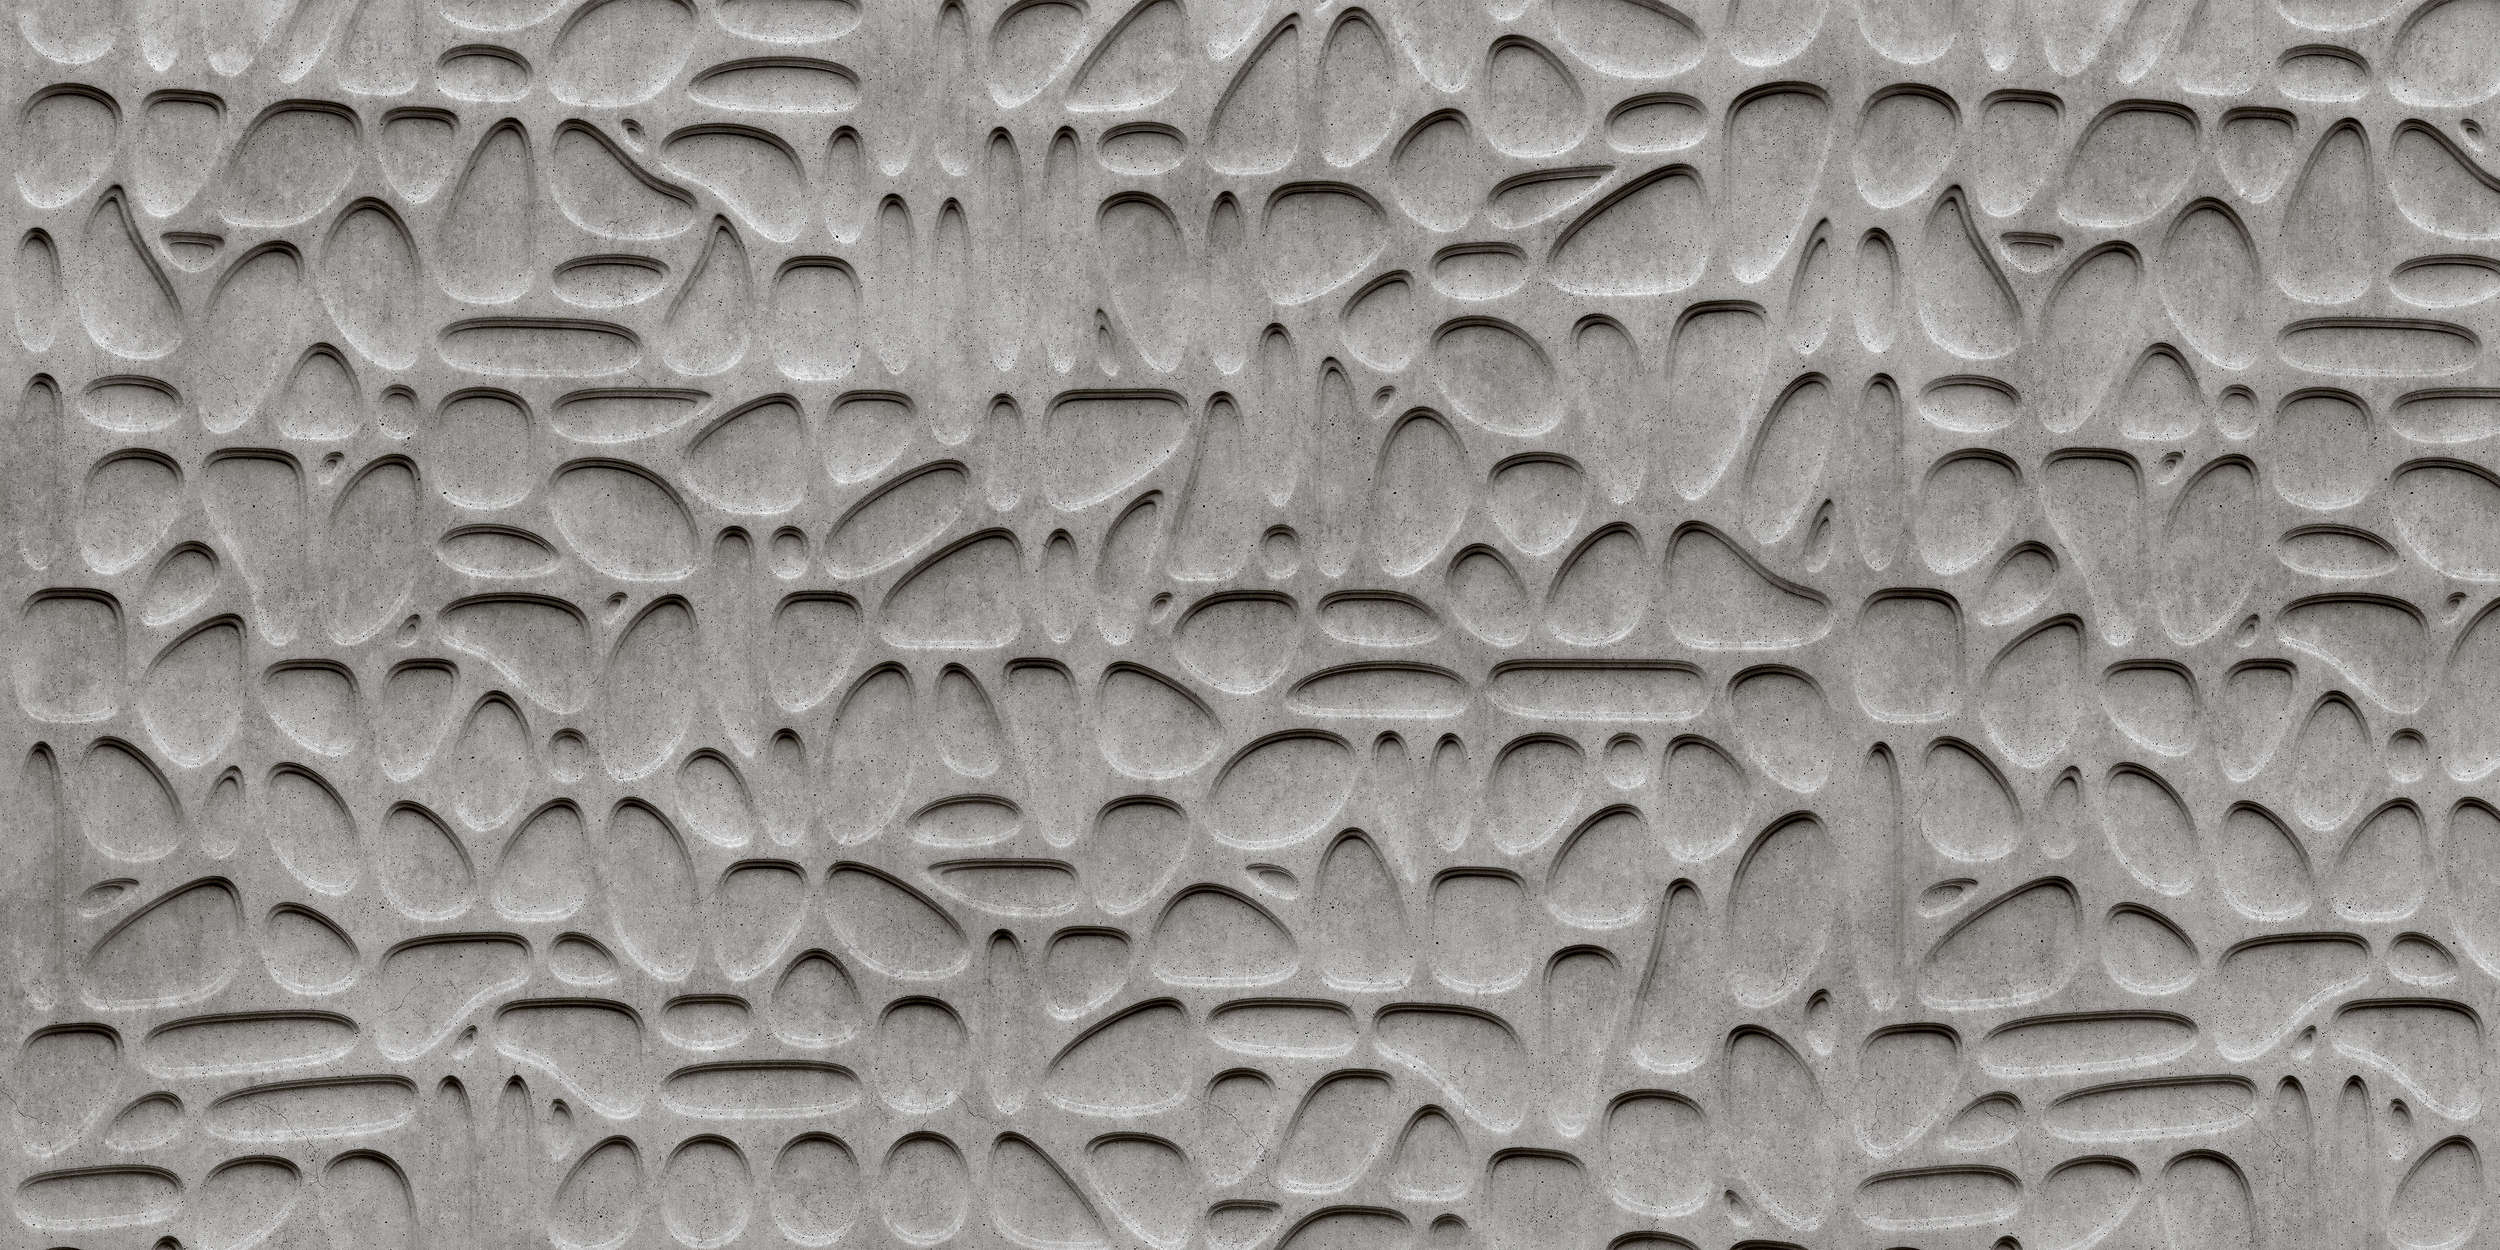             Maze 1 - Cool 3D Concrete Bubbles Onderlaag behang - Grijs, Zwart | Textured Non-woven
        